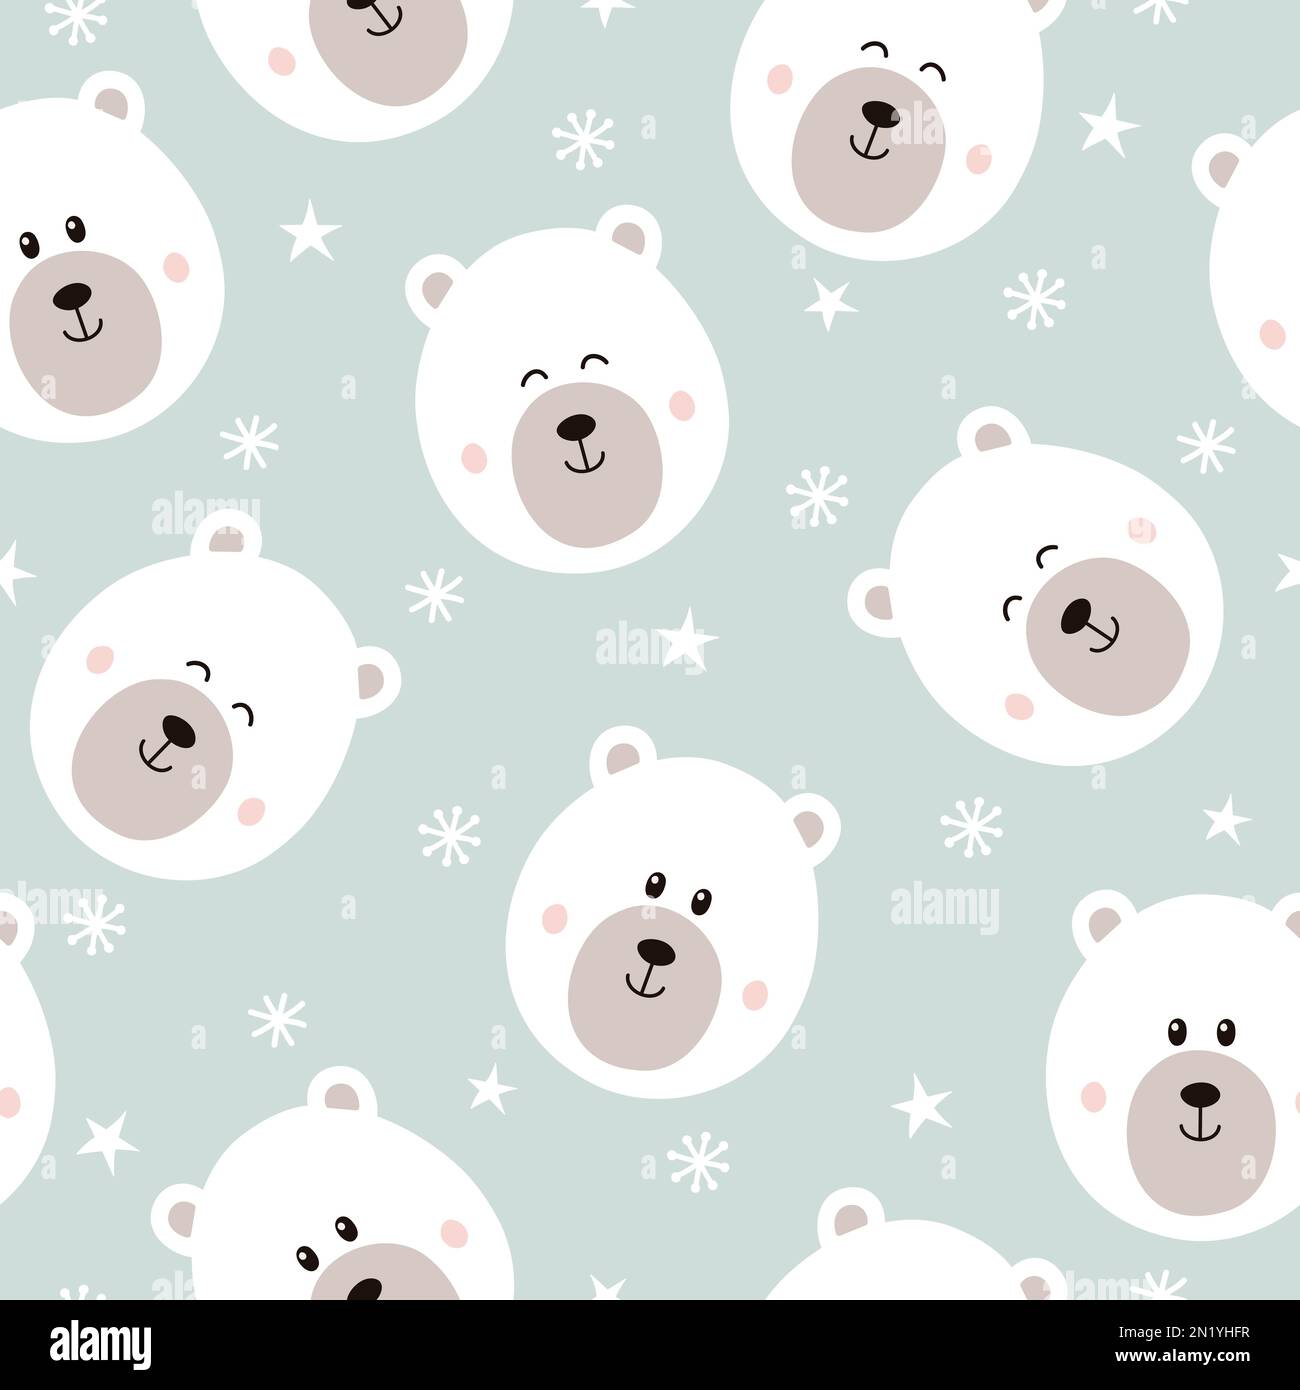 Seamless pattern with cute bear. Childish texture with polar bear. Stock Photo